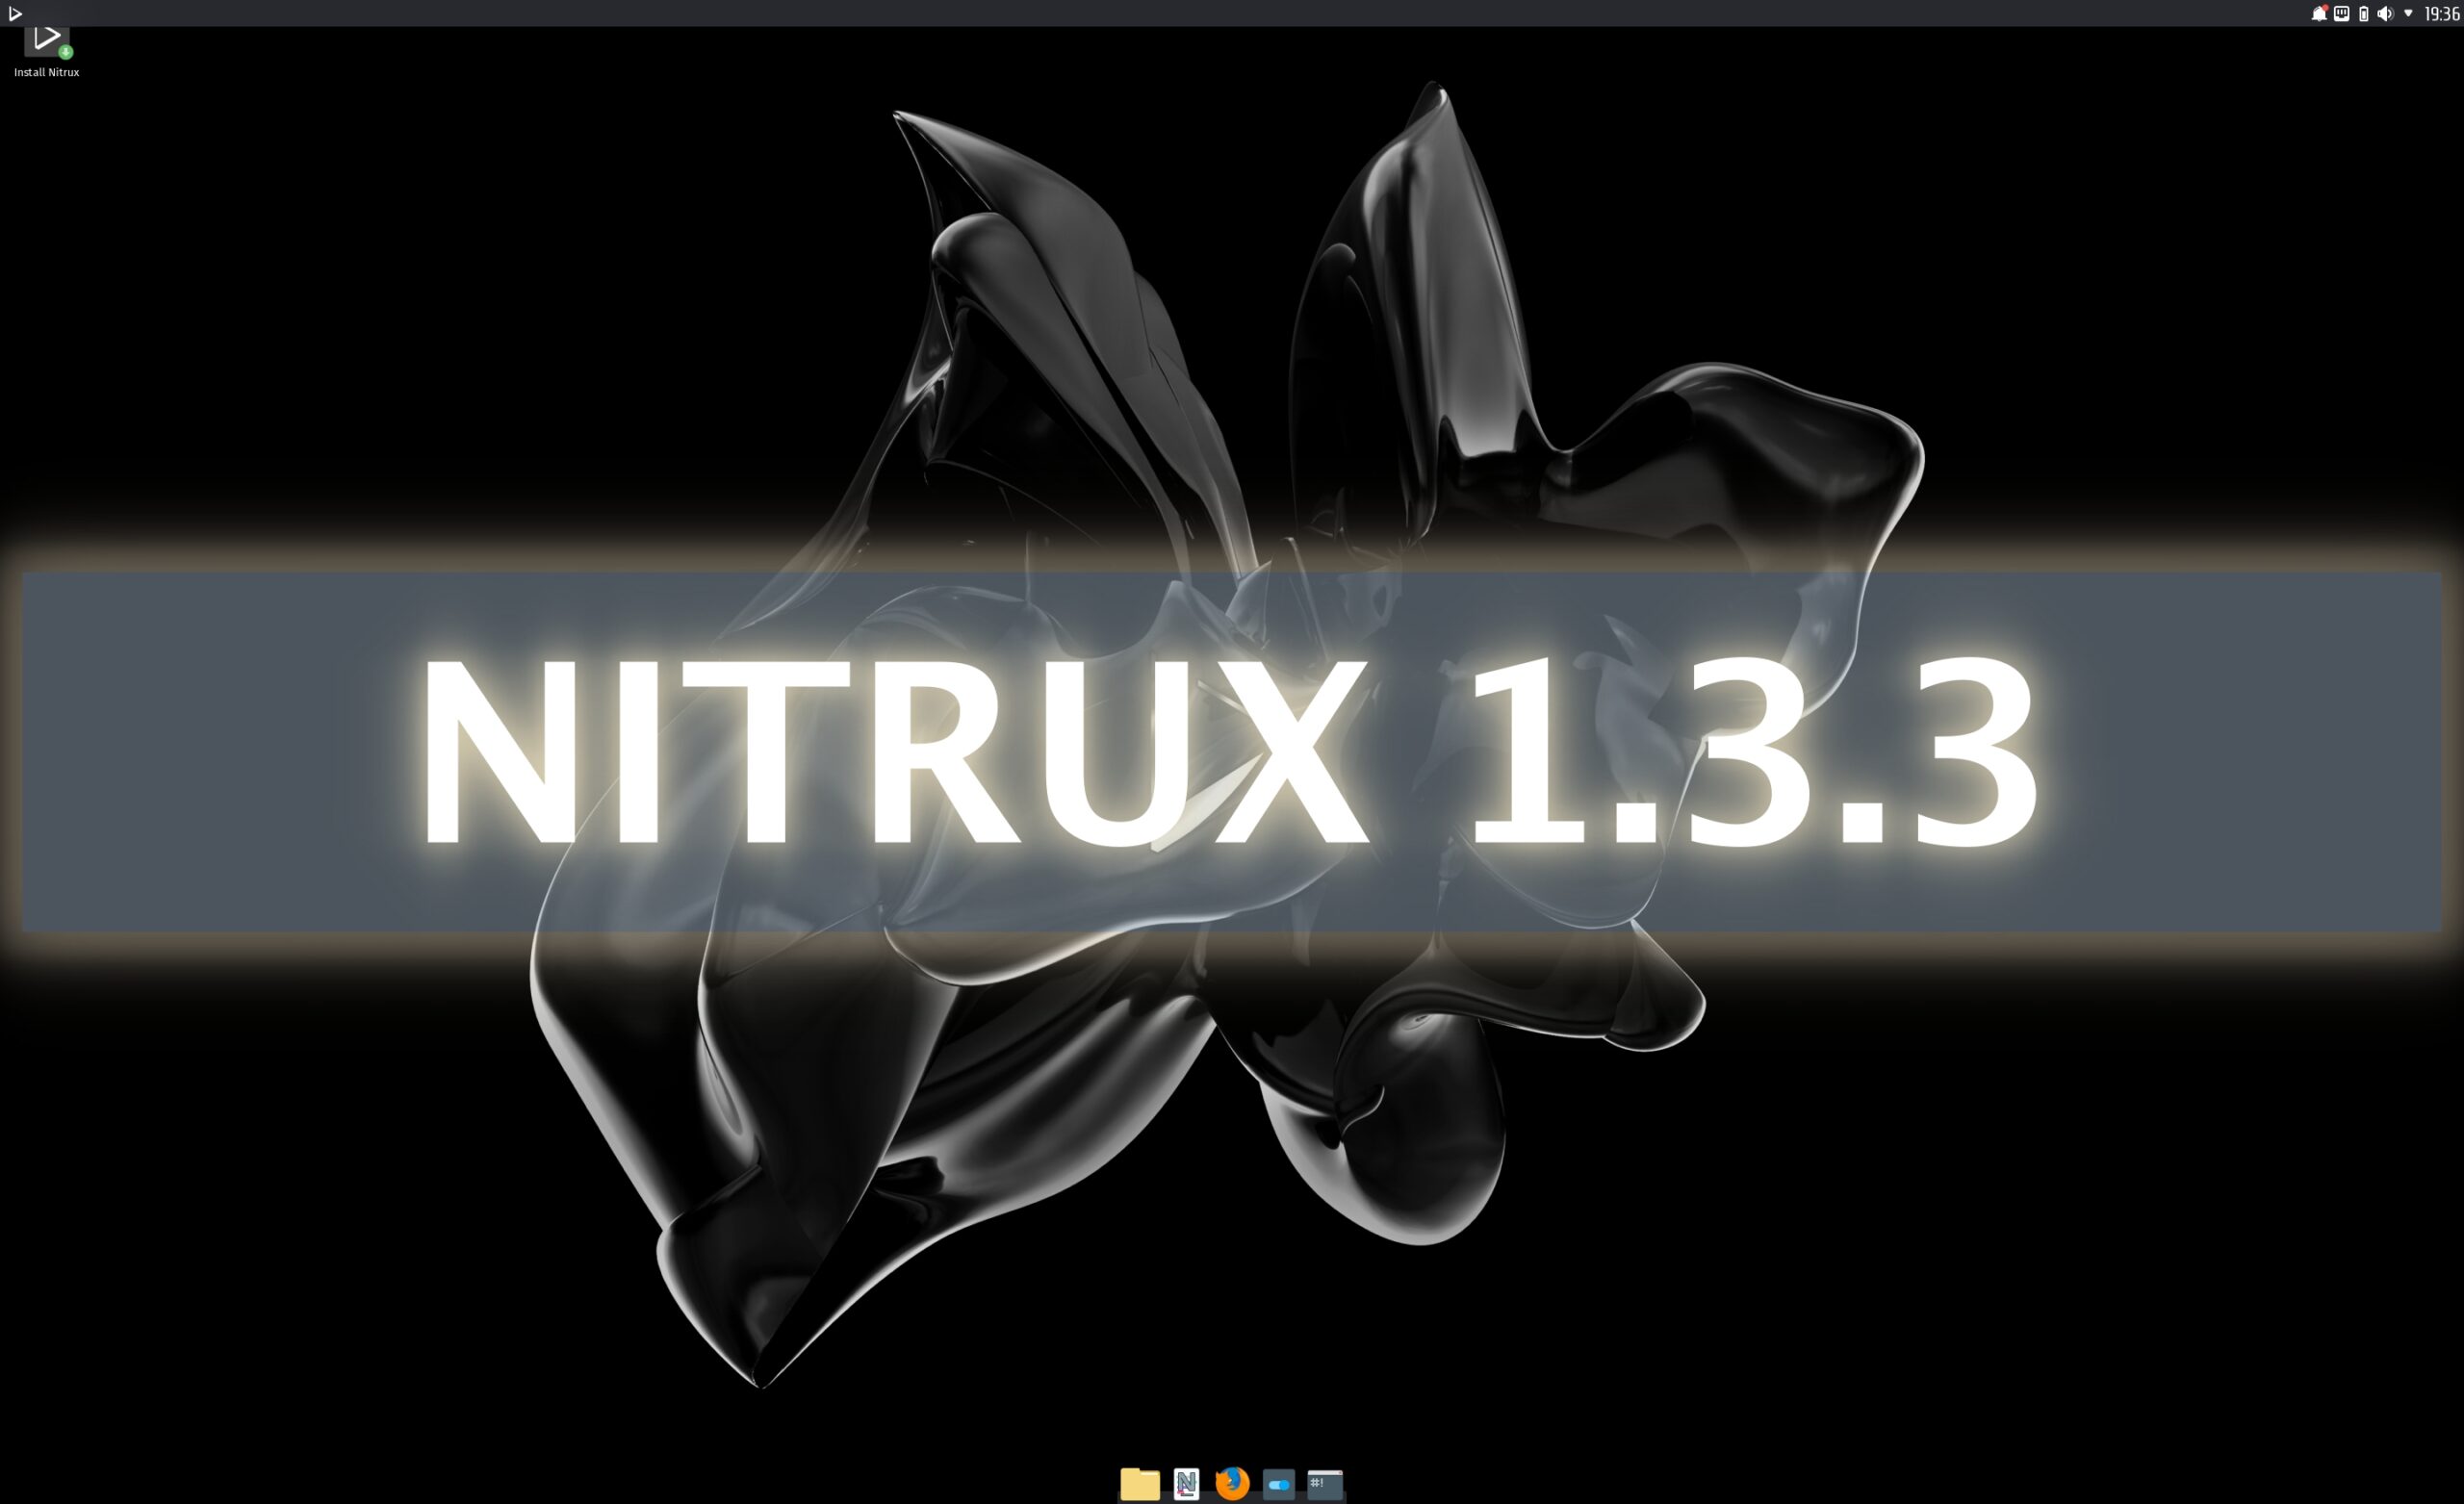 Nitrux 1.3.3 Released with KDE Plasma 5.19.5 Desktop, Smaller ISO Image